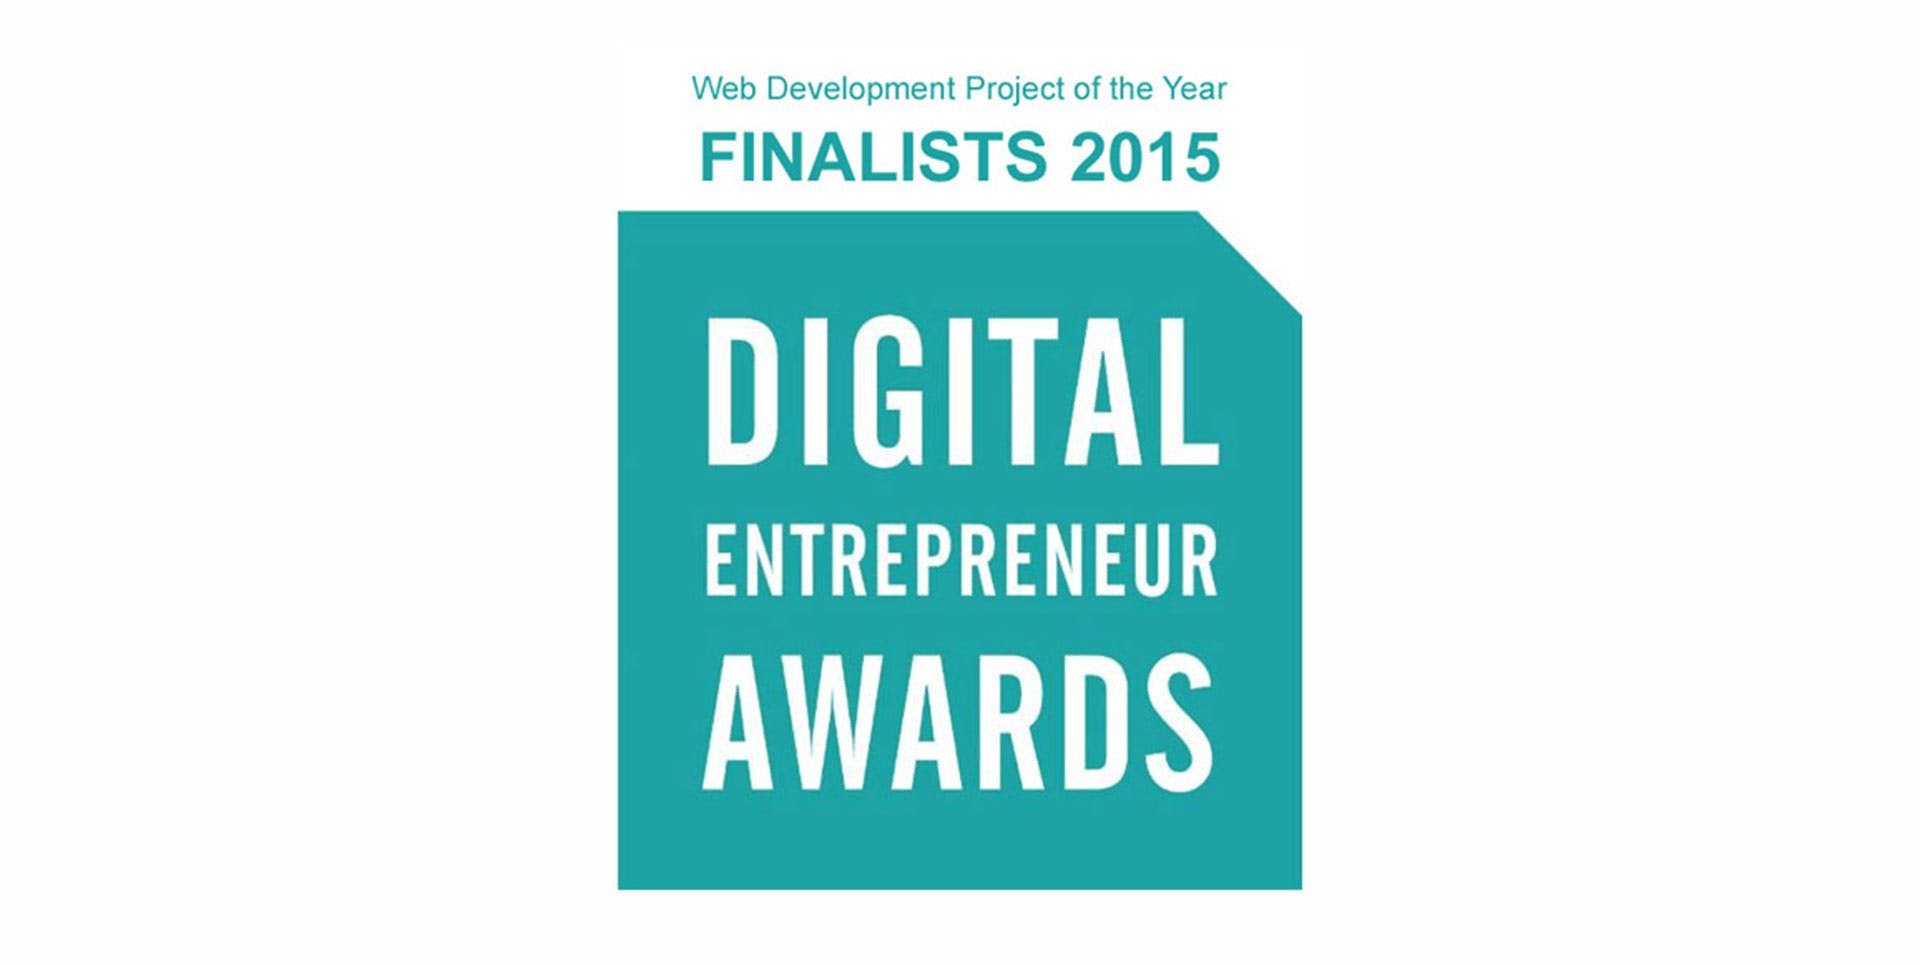 Digital Entrepreneur Award Finalists 2015